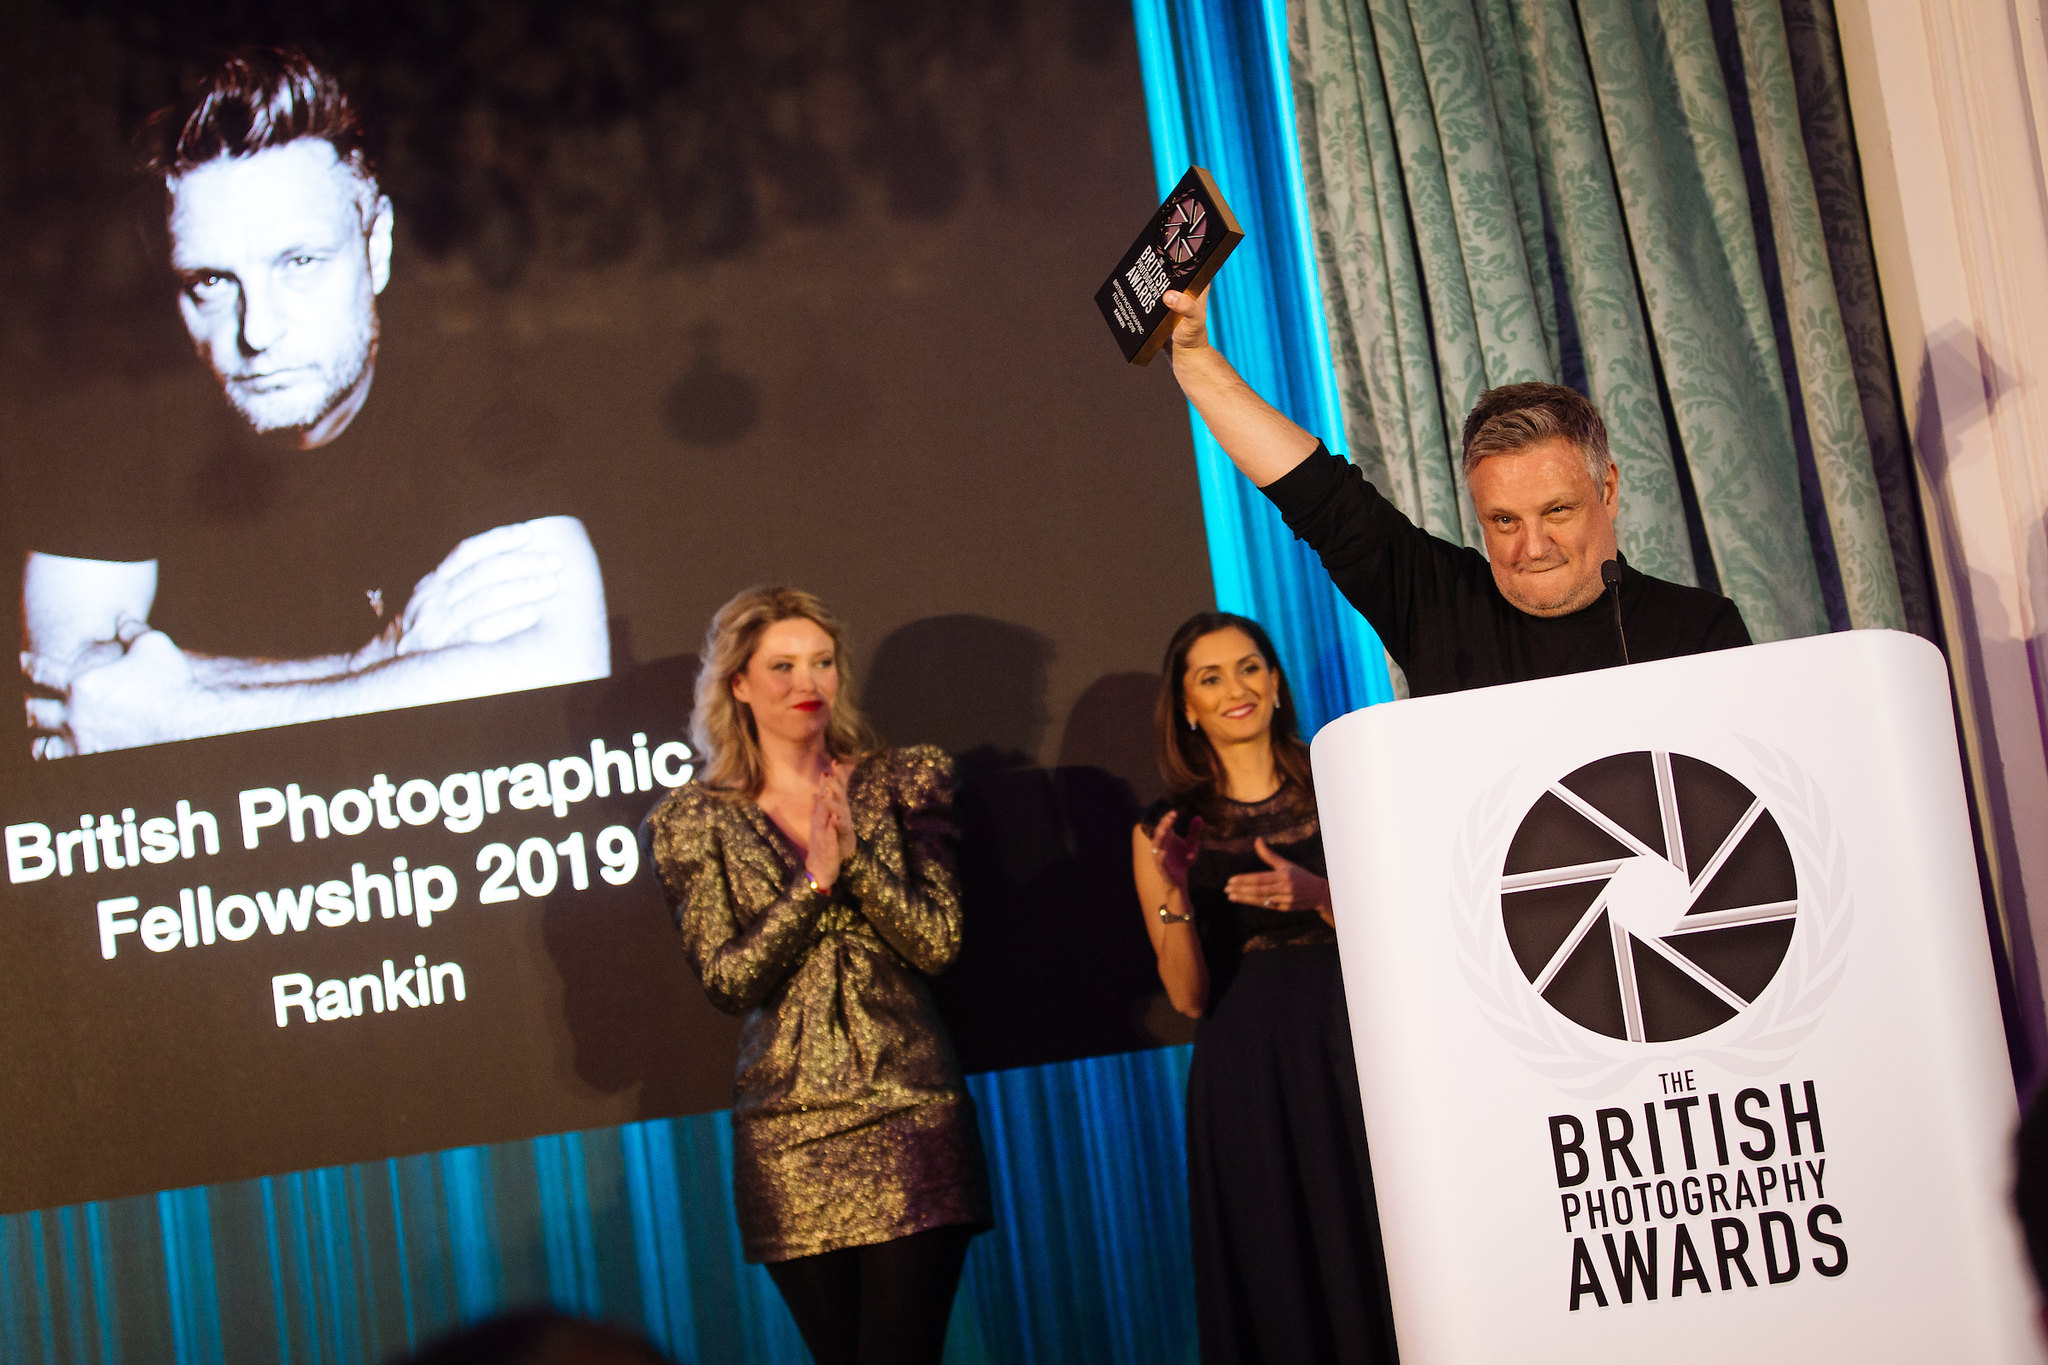 The British Photography Awards